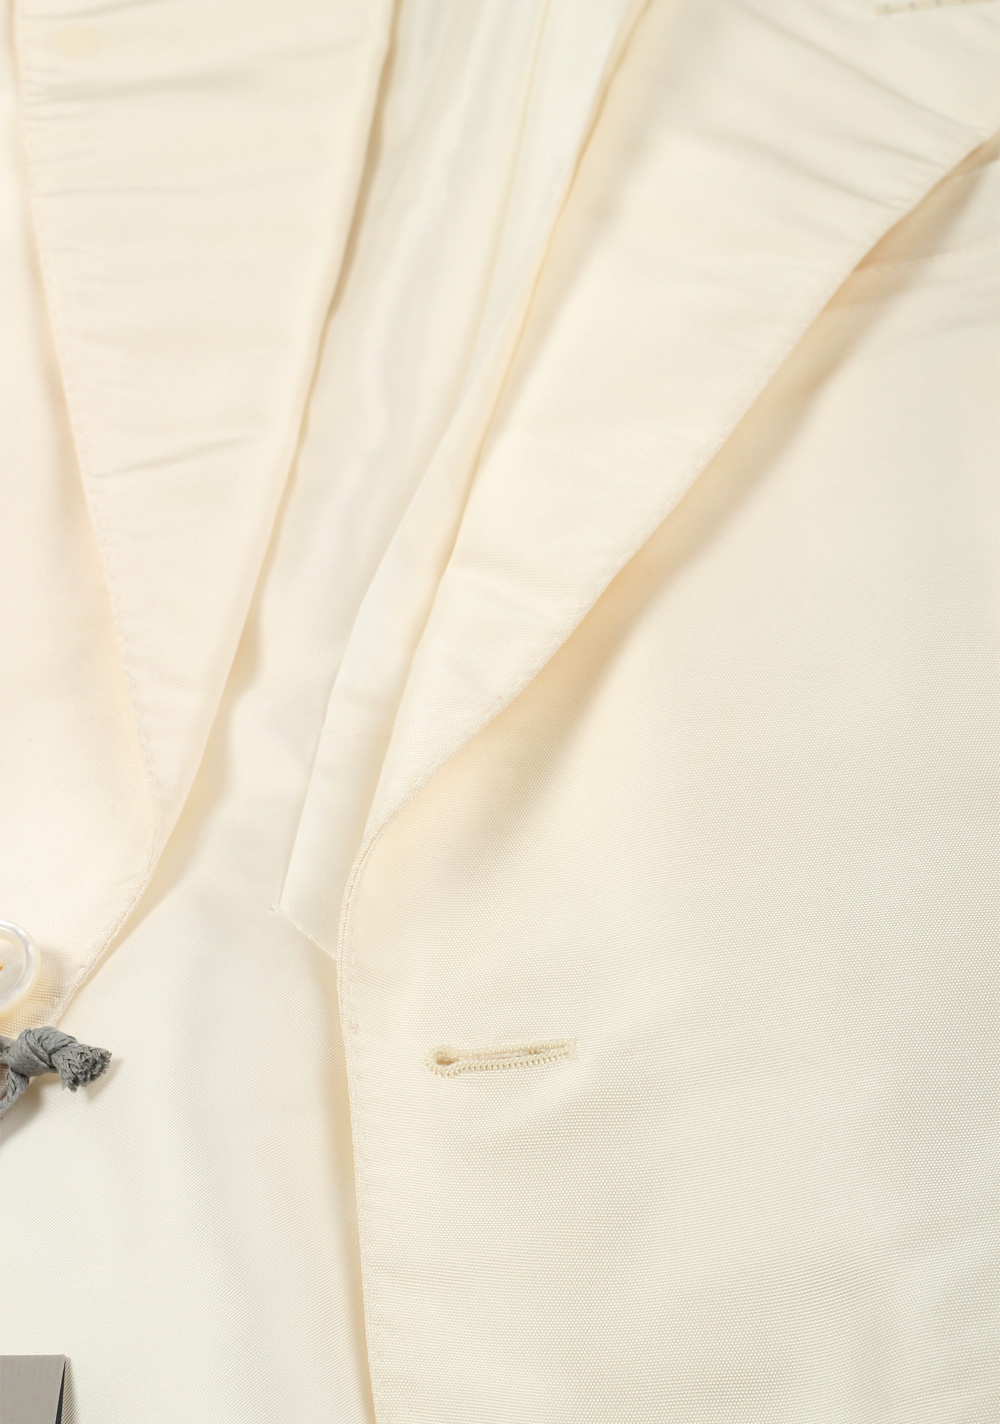 TOM FORD Shelton Silk Off White Sport Coat Size 46 / 36R U.S. | Costume Limité